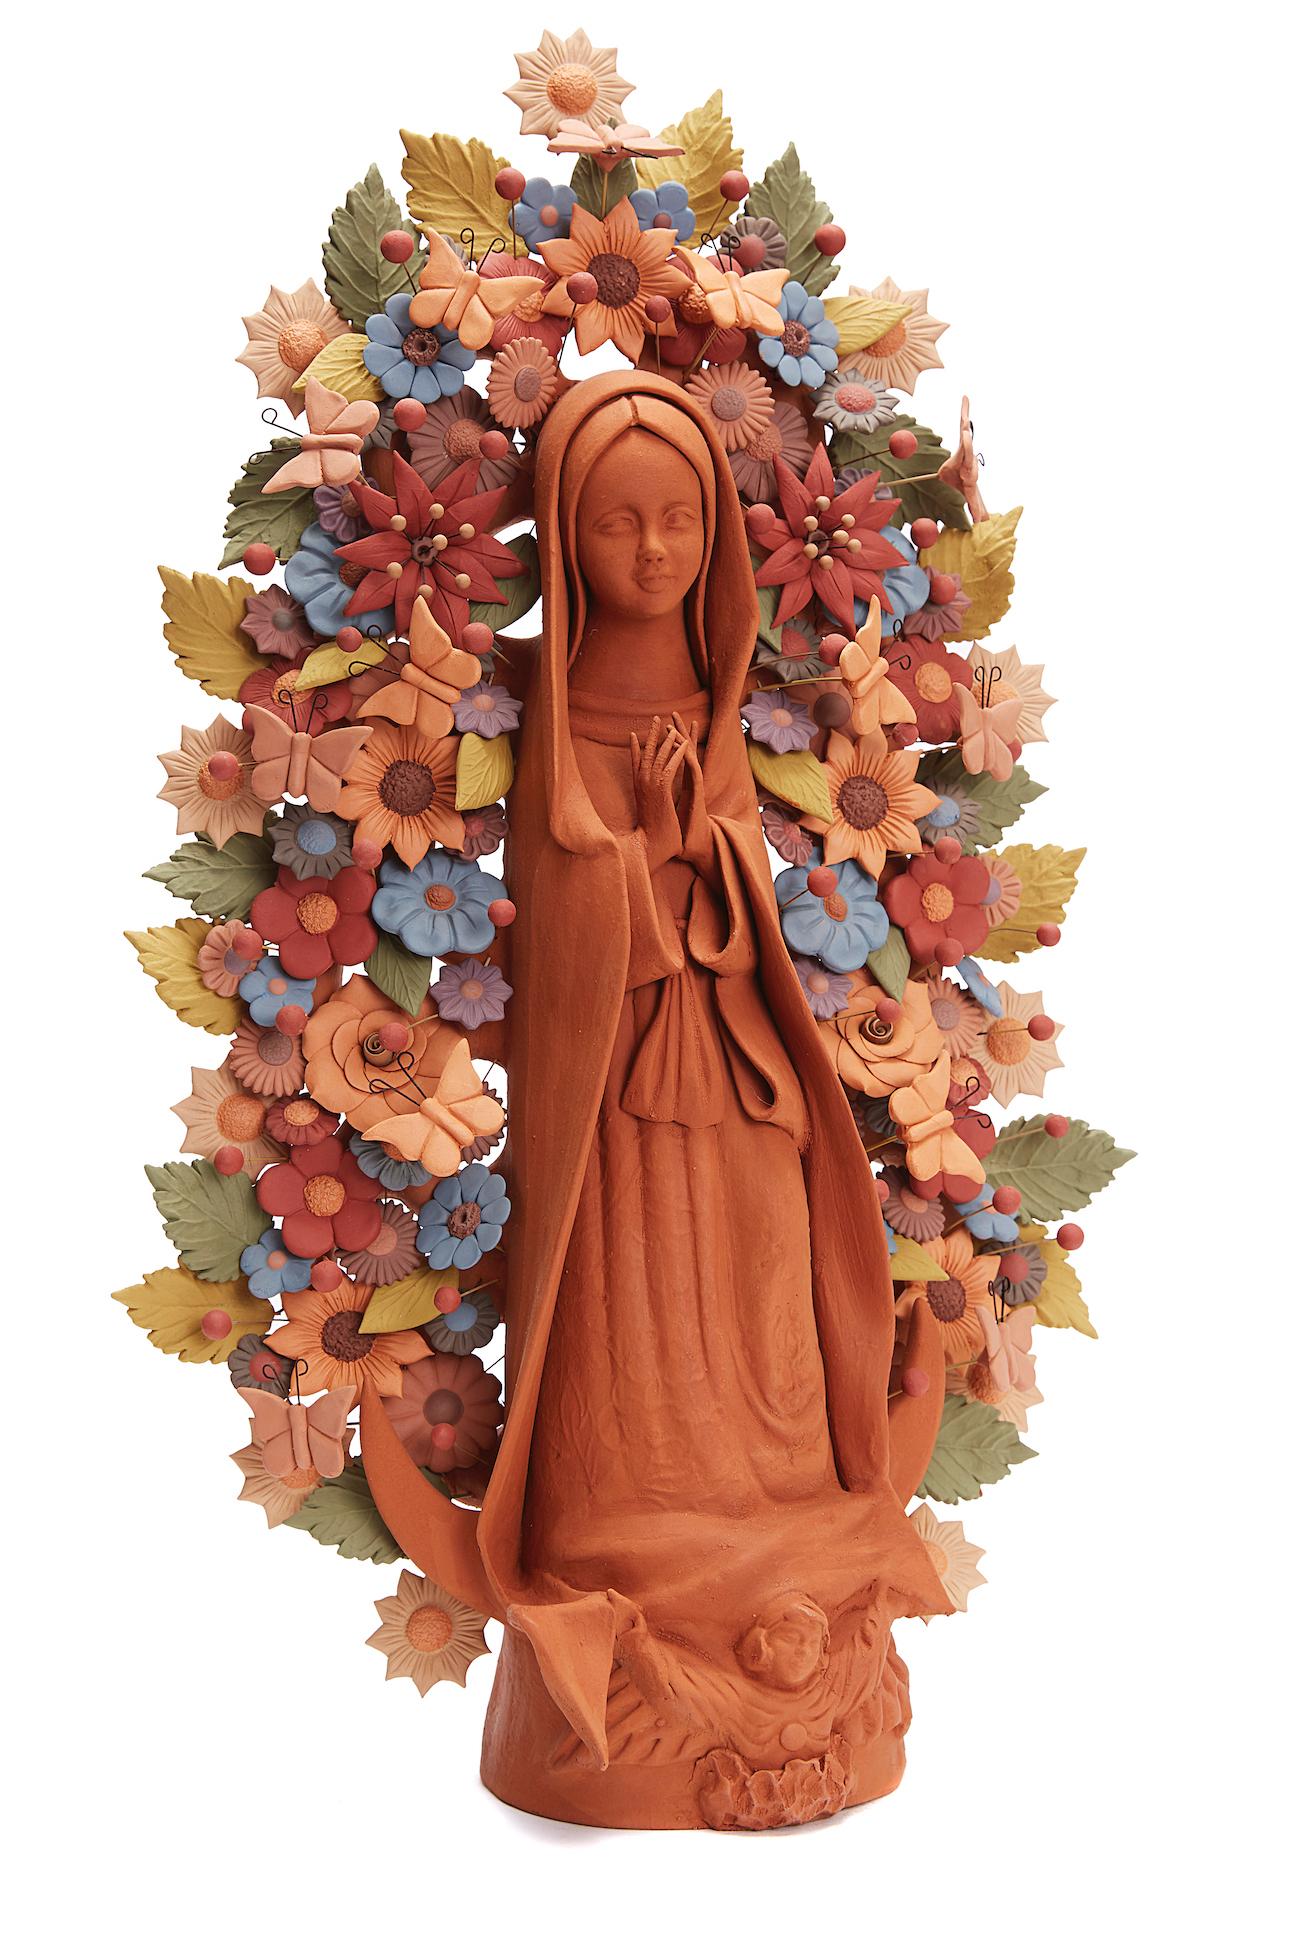 Cecilio Sanchez Fierro Figurative Sculpture - Virgen de Guadalupe - Our Lady of Guadalupe   / Ceramics Mexican Folk Art Clay